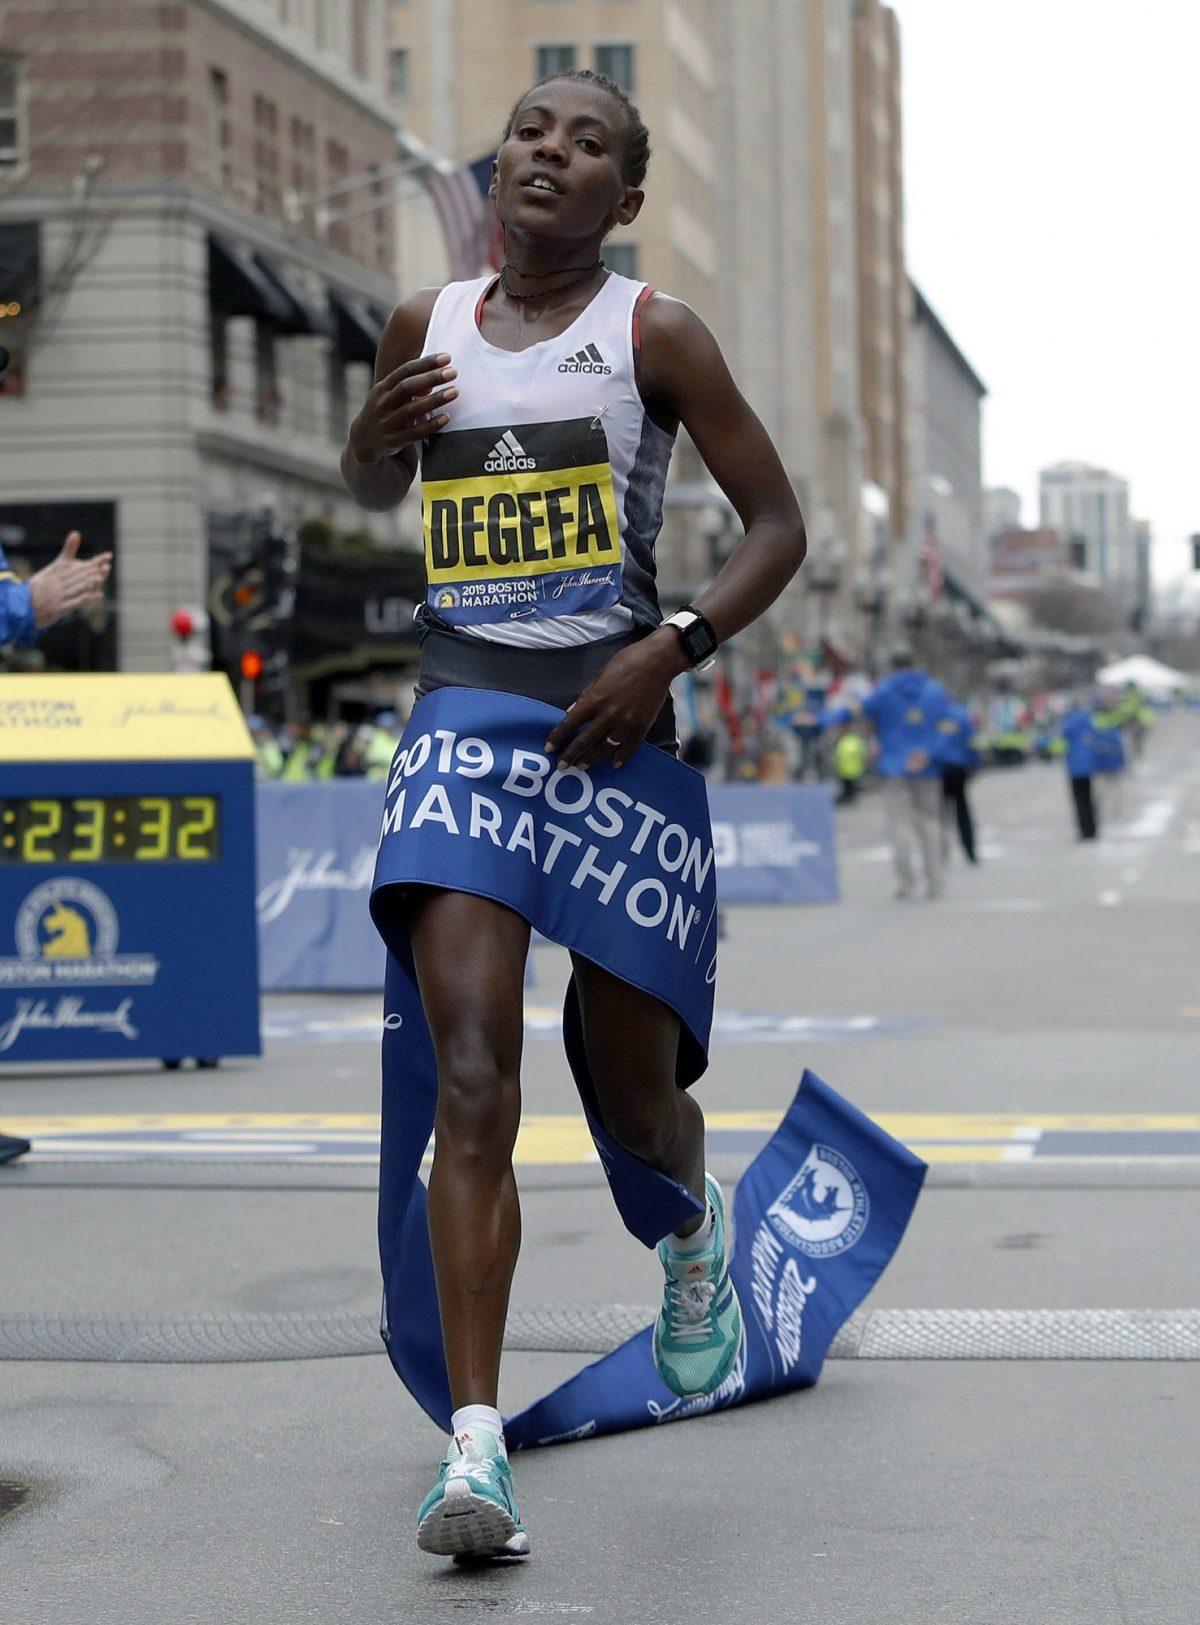 Worknesh Degefa, of Ethiopia, breaks the tape to win the women's division of the 123rd Boston Marathon in Boston on April 15, 2019. (Winslow Townson/AP Photo)